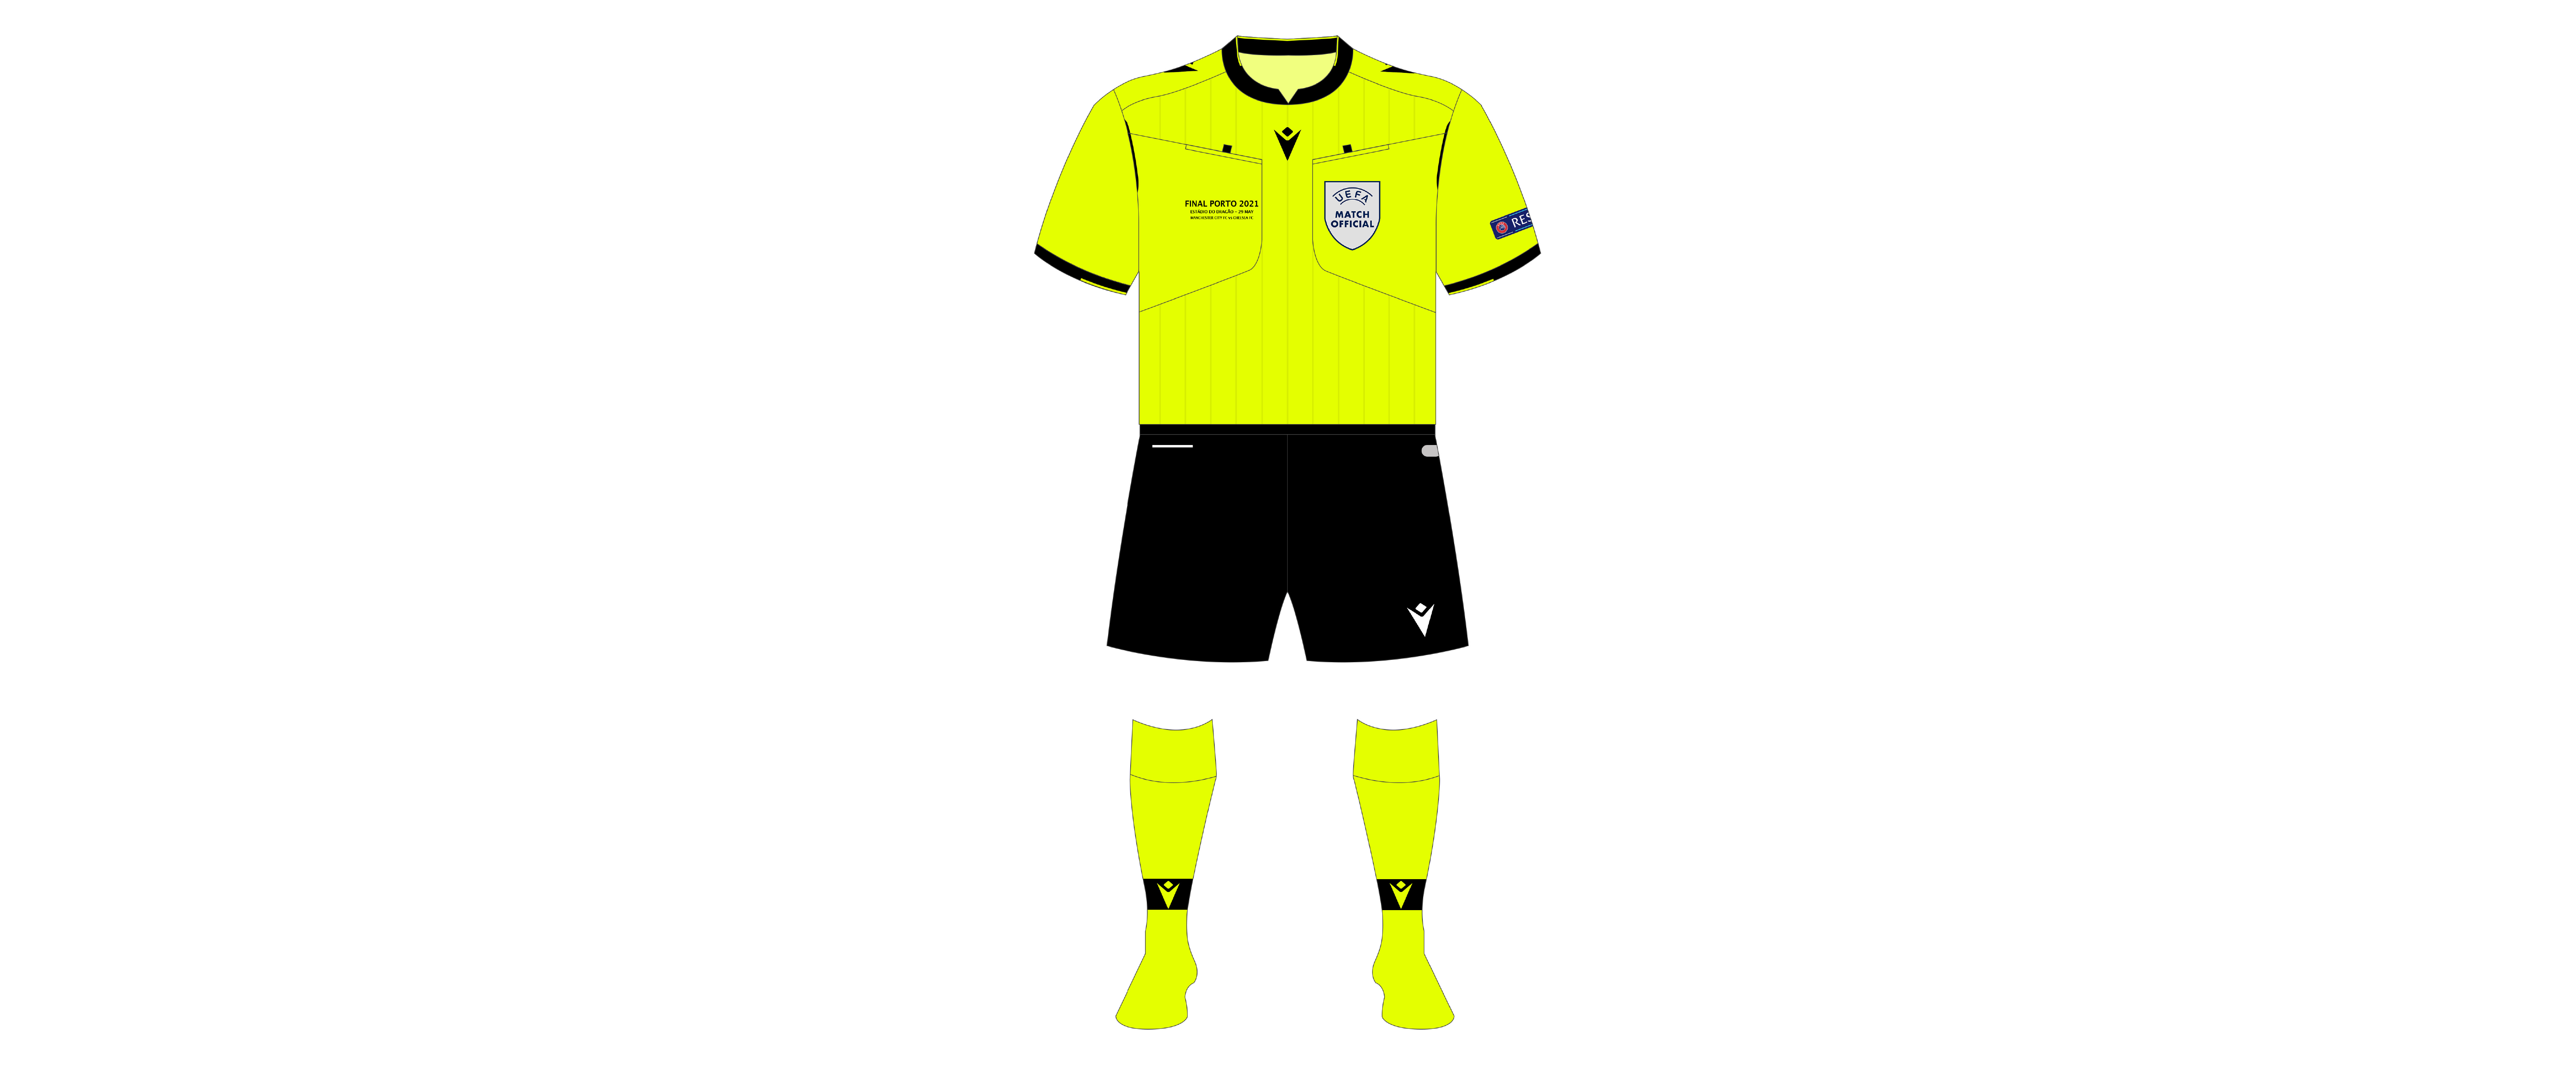 Eredivisie – Referee Kit History